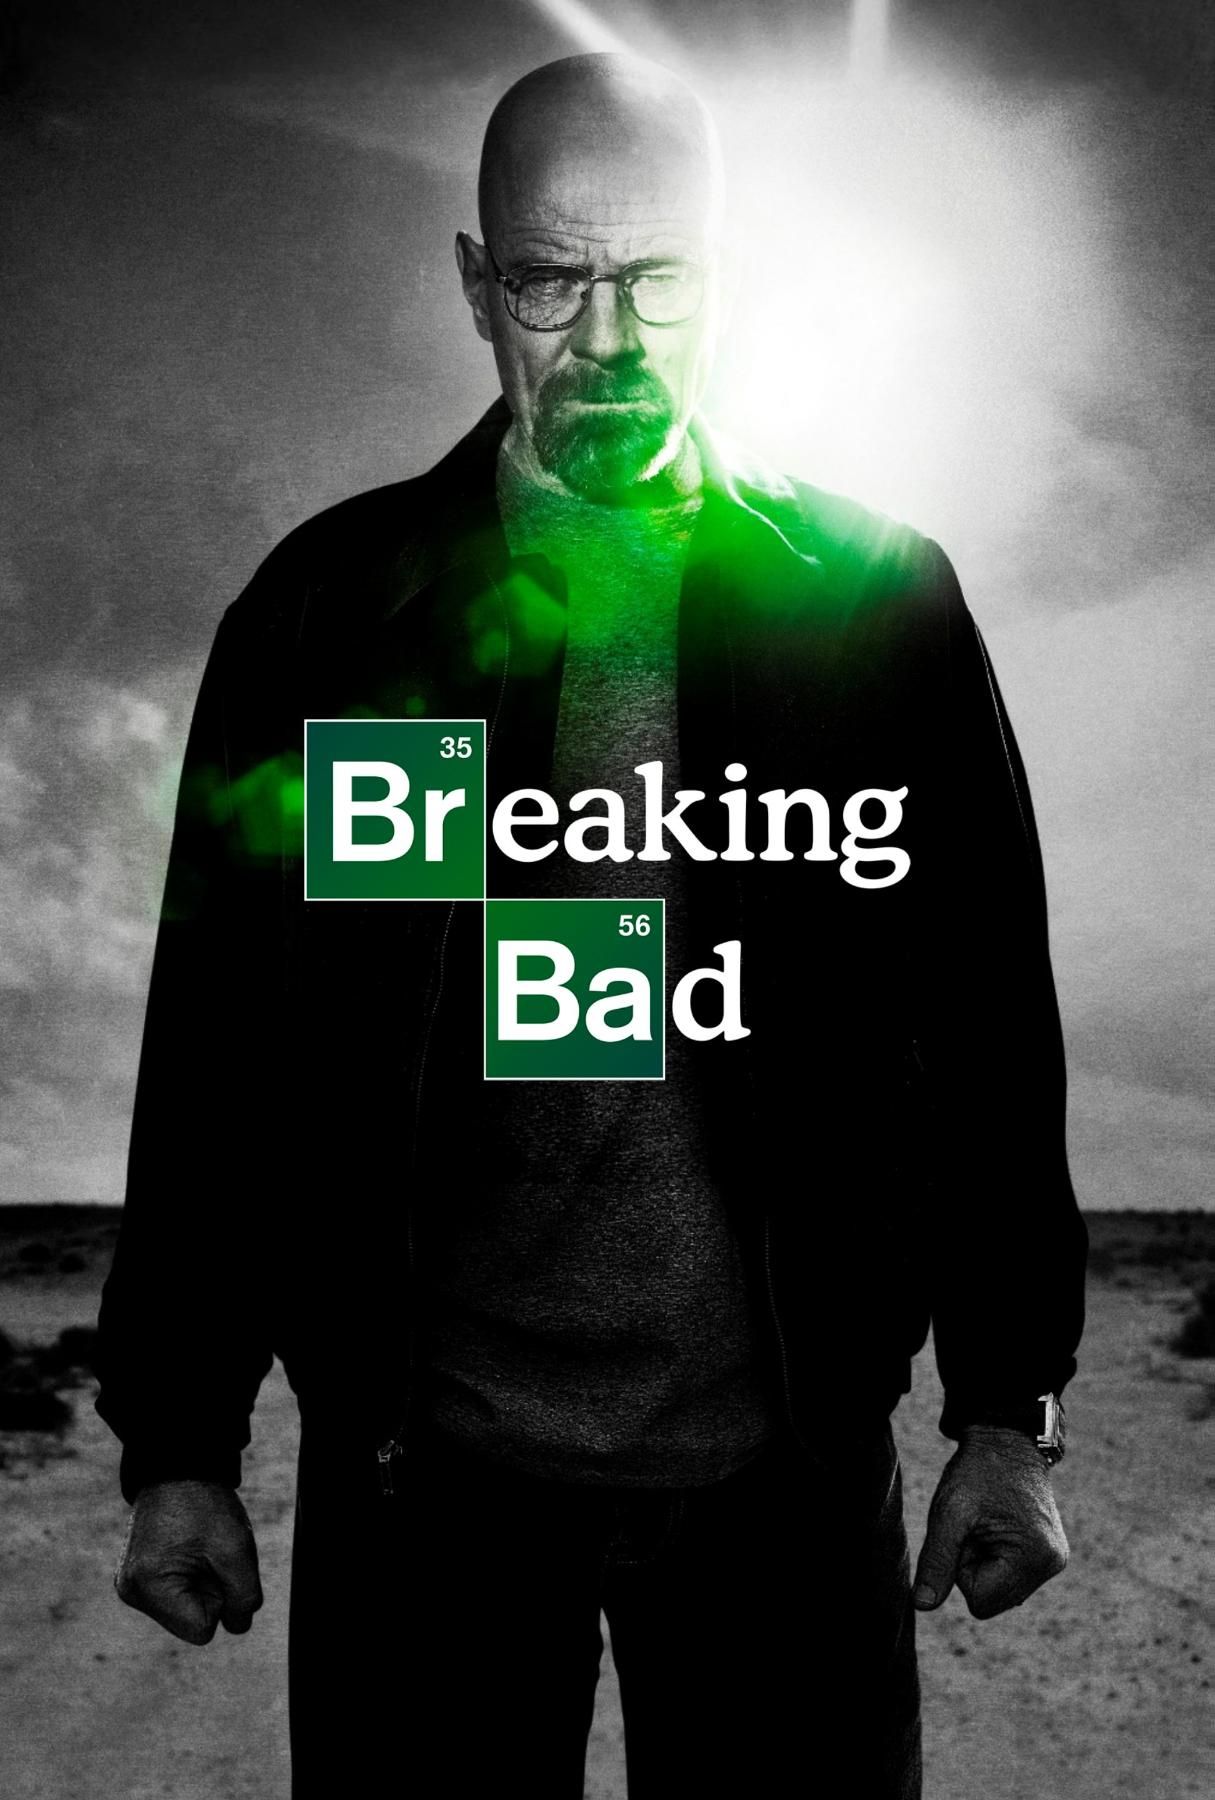 20 Best 'Breaking Bad' Episodes, Ranked According to IMDb